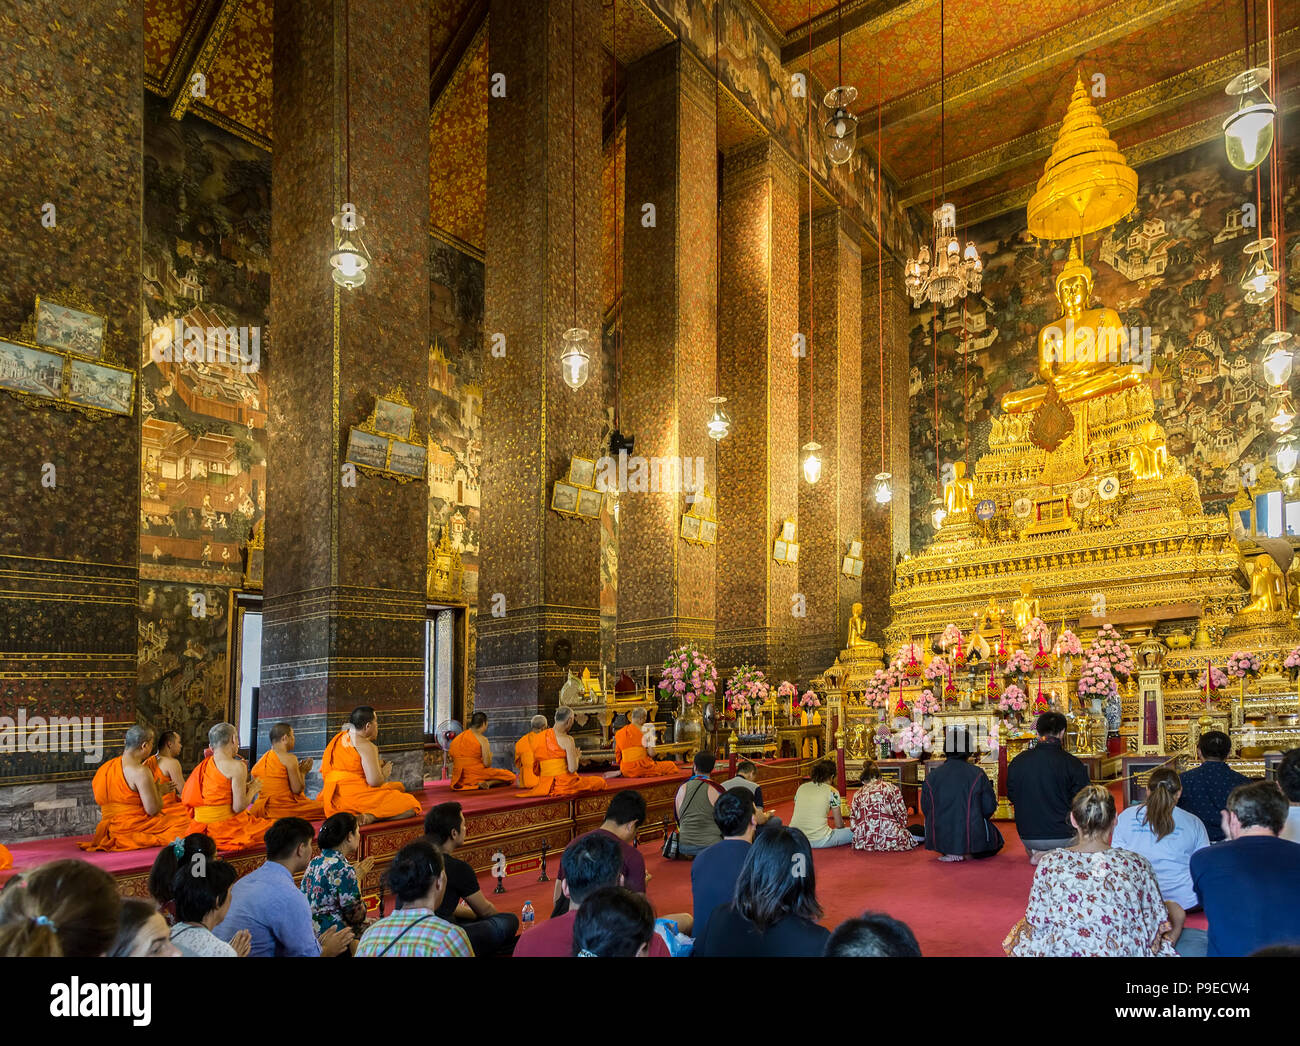 People and monks praying, Wat Pho temple, Bangkok, Thailand Stock Photo